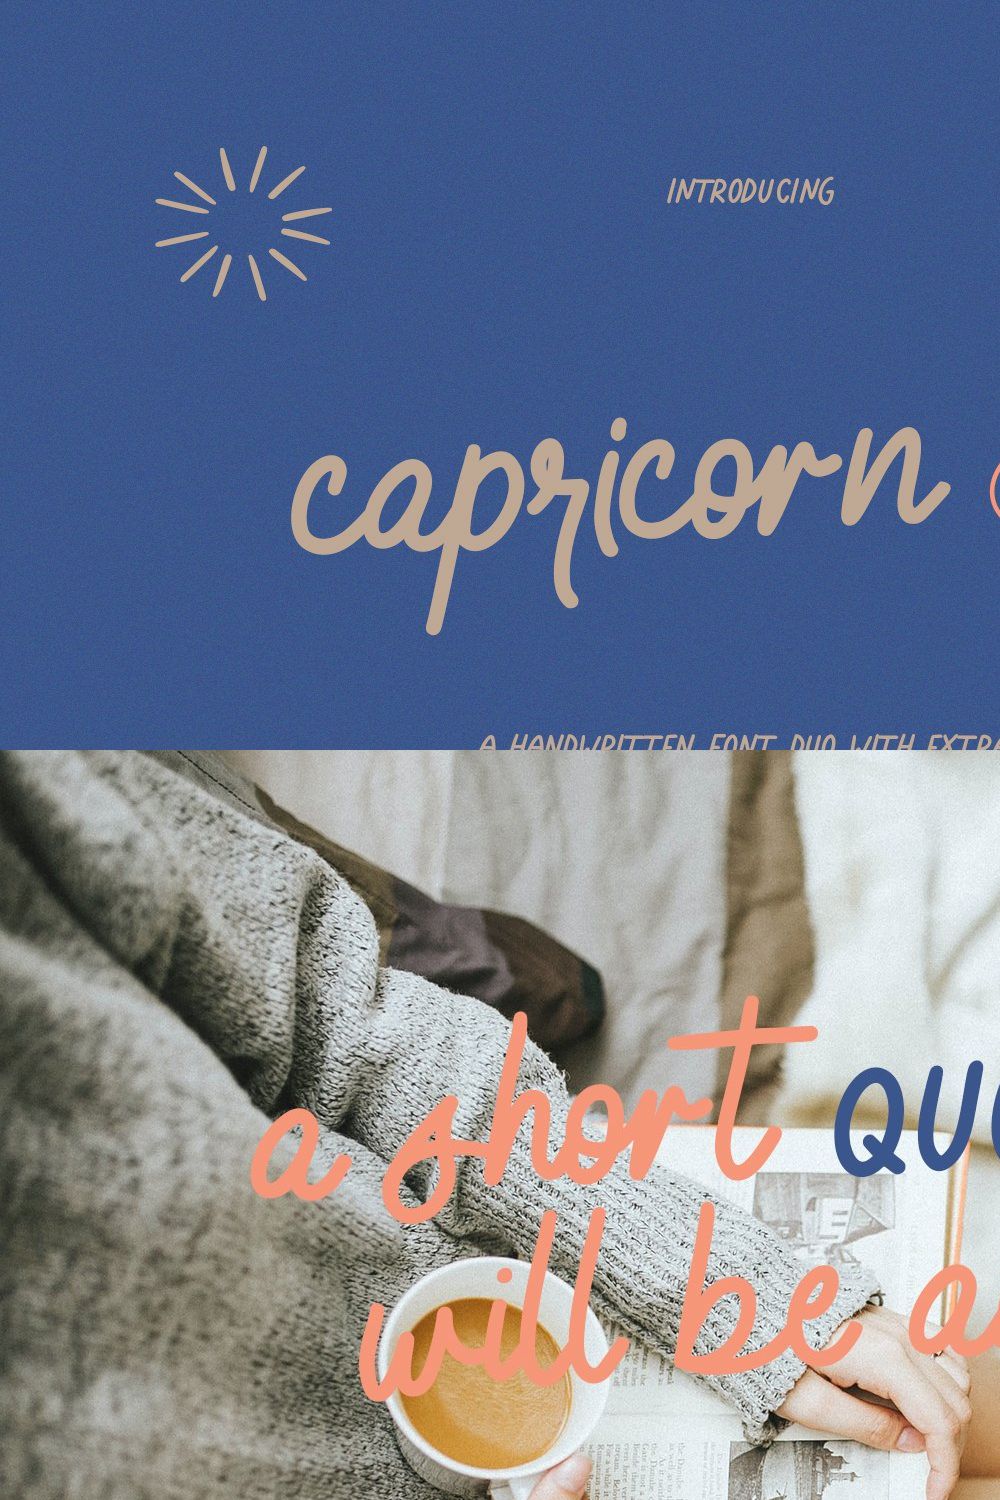 Capricorn Sign Handwritten Font Duo pinterest preview image.